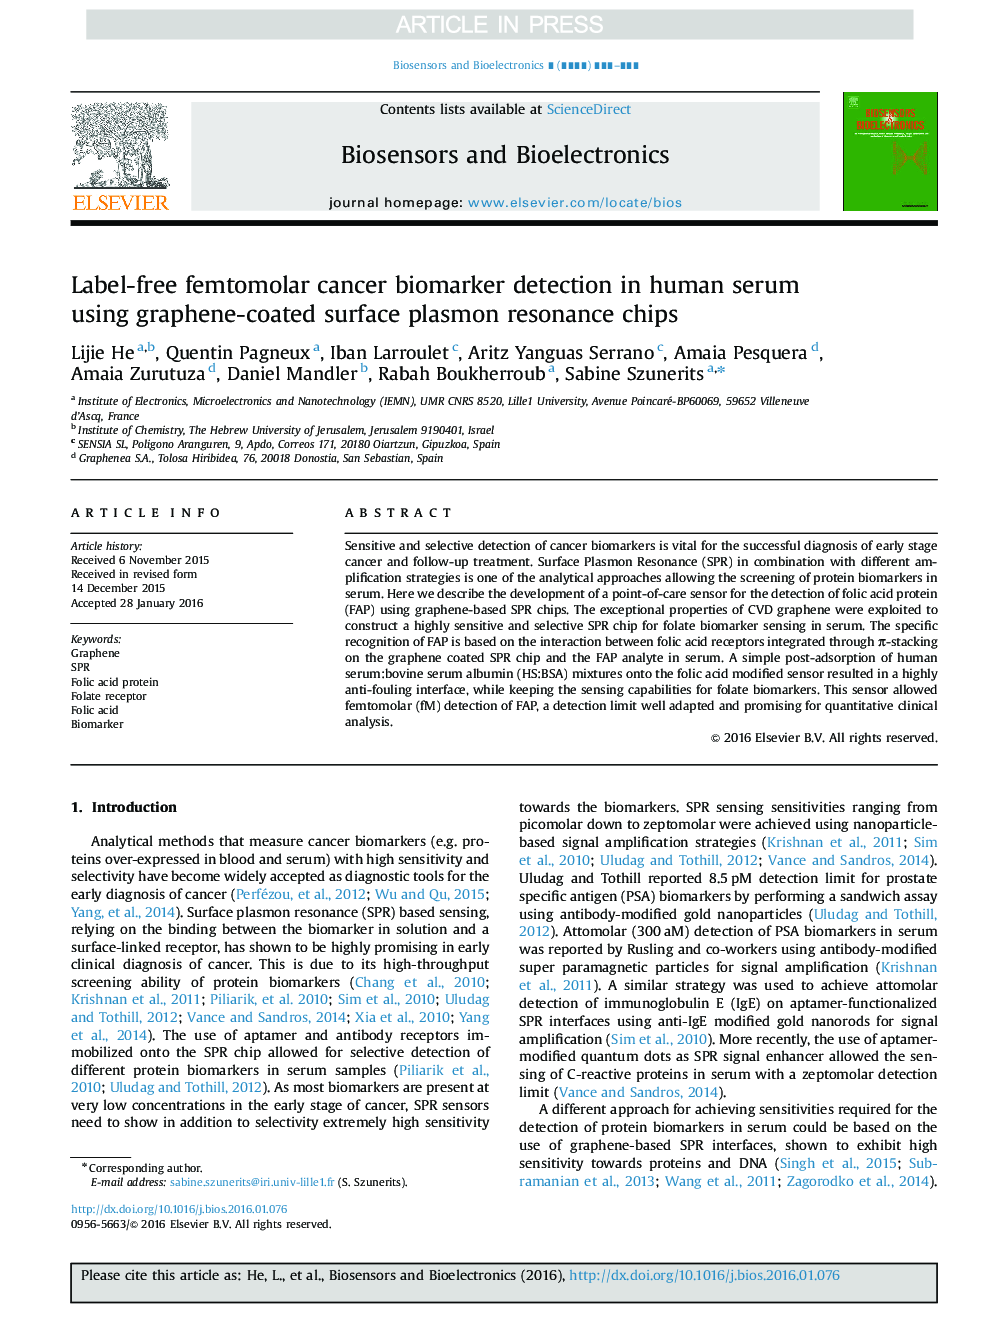 Label-free femtomolar cancer biomarker detection in human serum using graphene-coated surface plasmon resonance chips